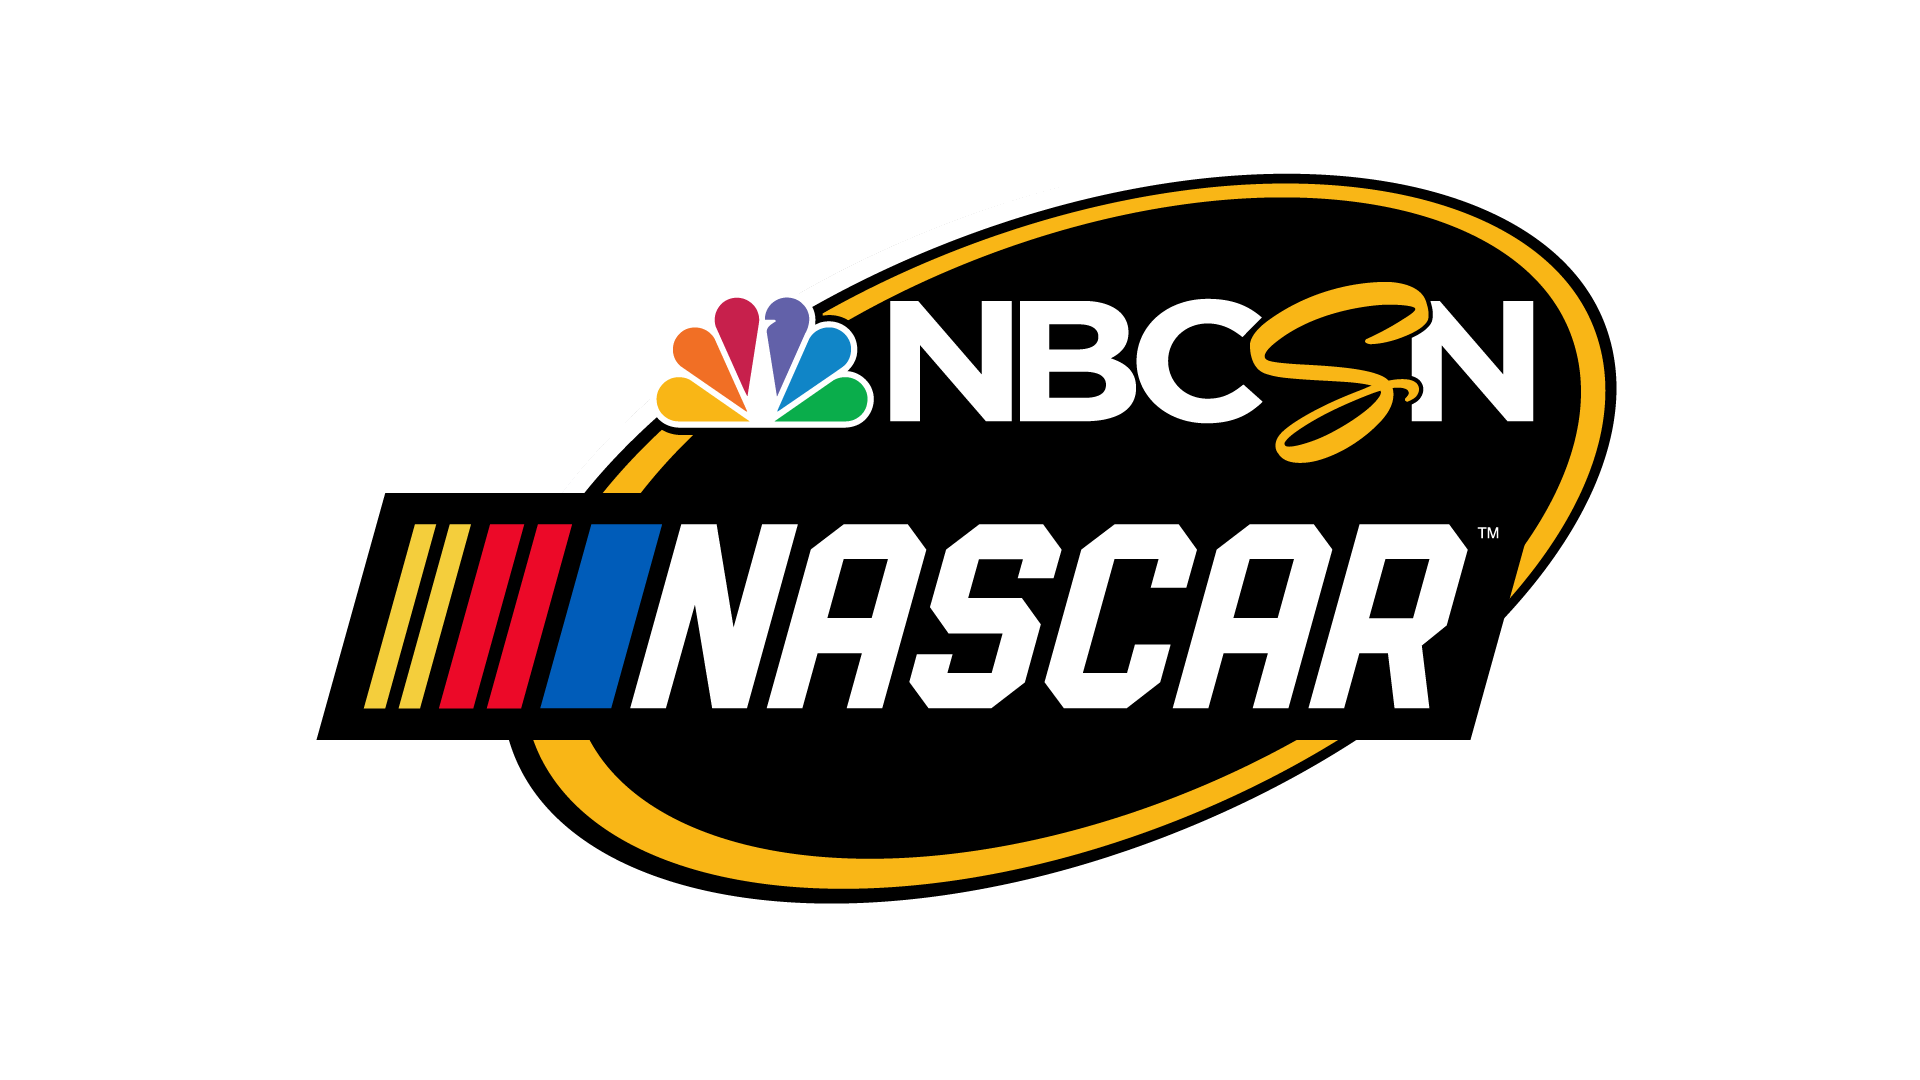 Nbcsn Logo - NASCAR on NBCSN | Logopedia | FANDOM powered by Wikia